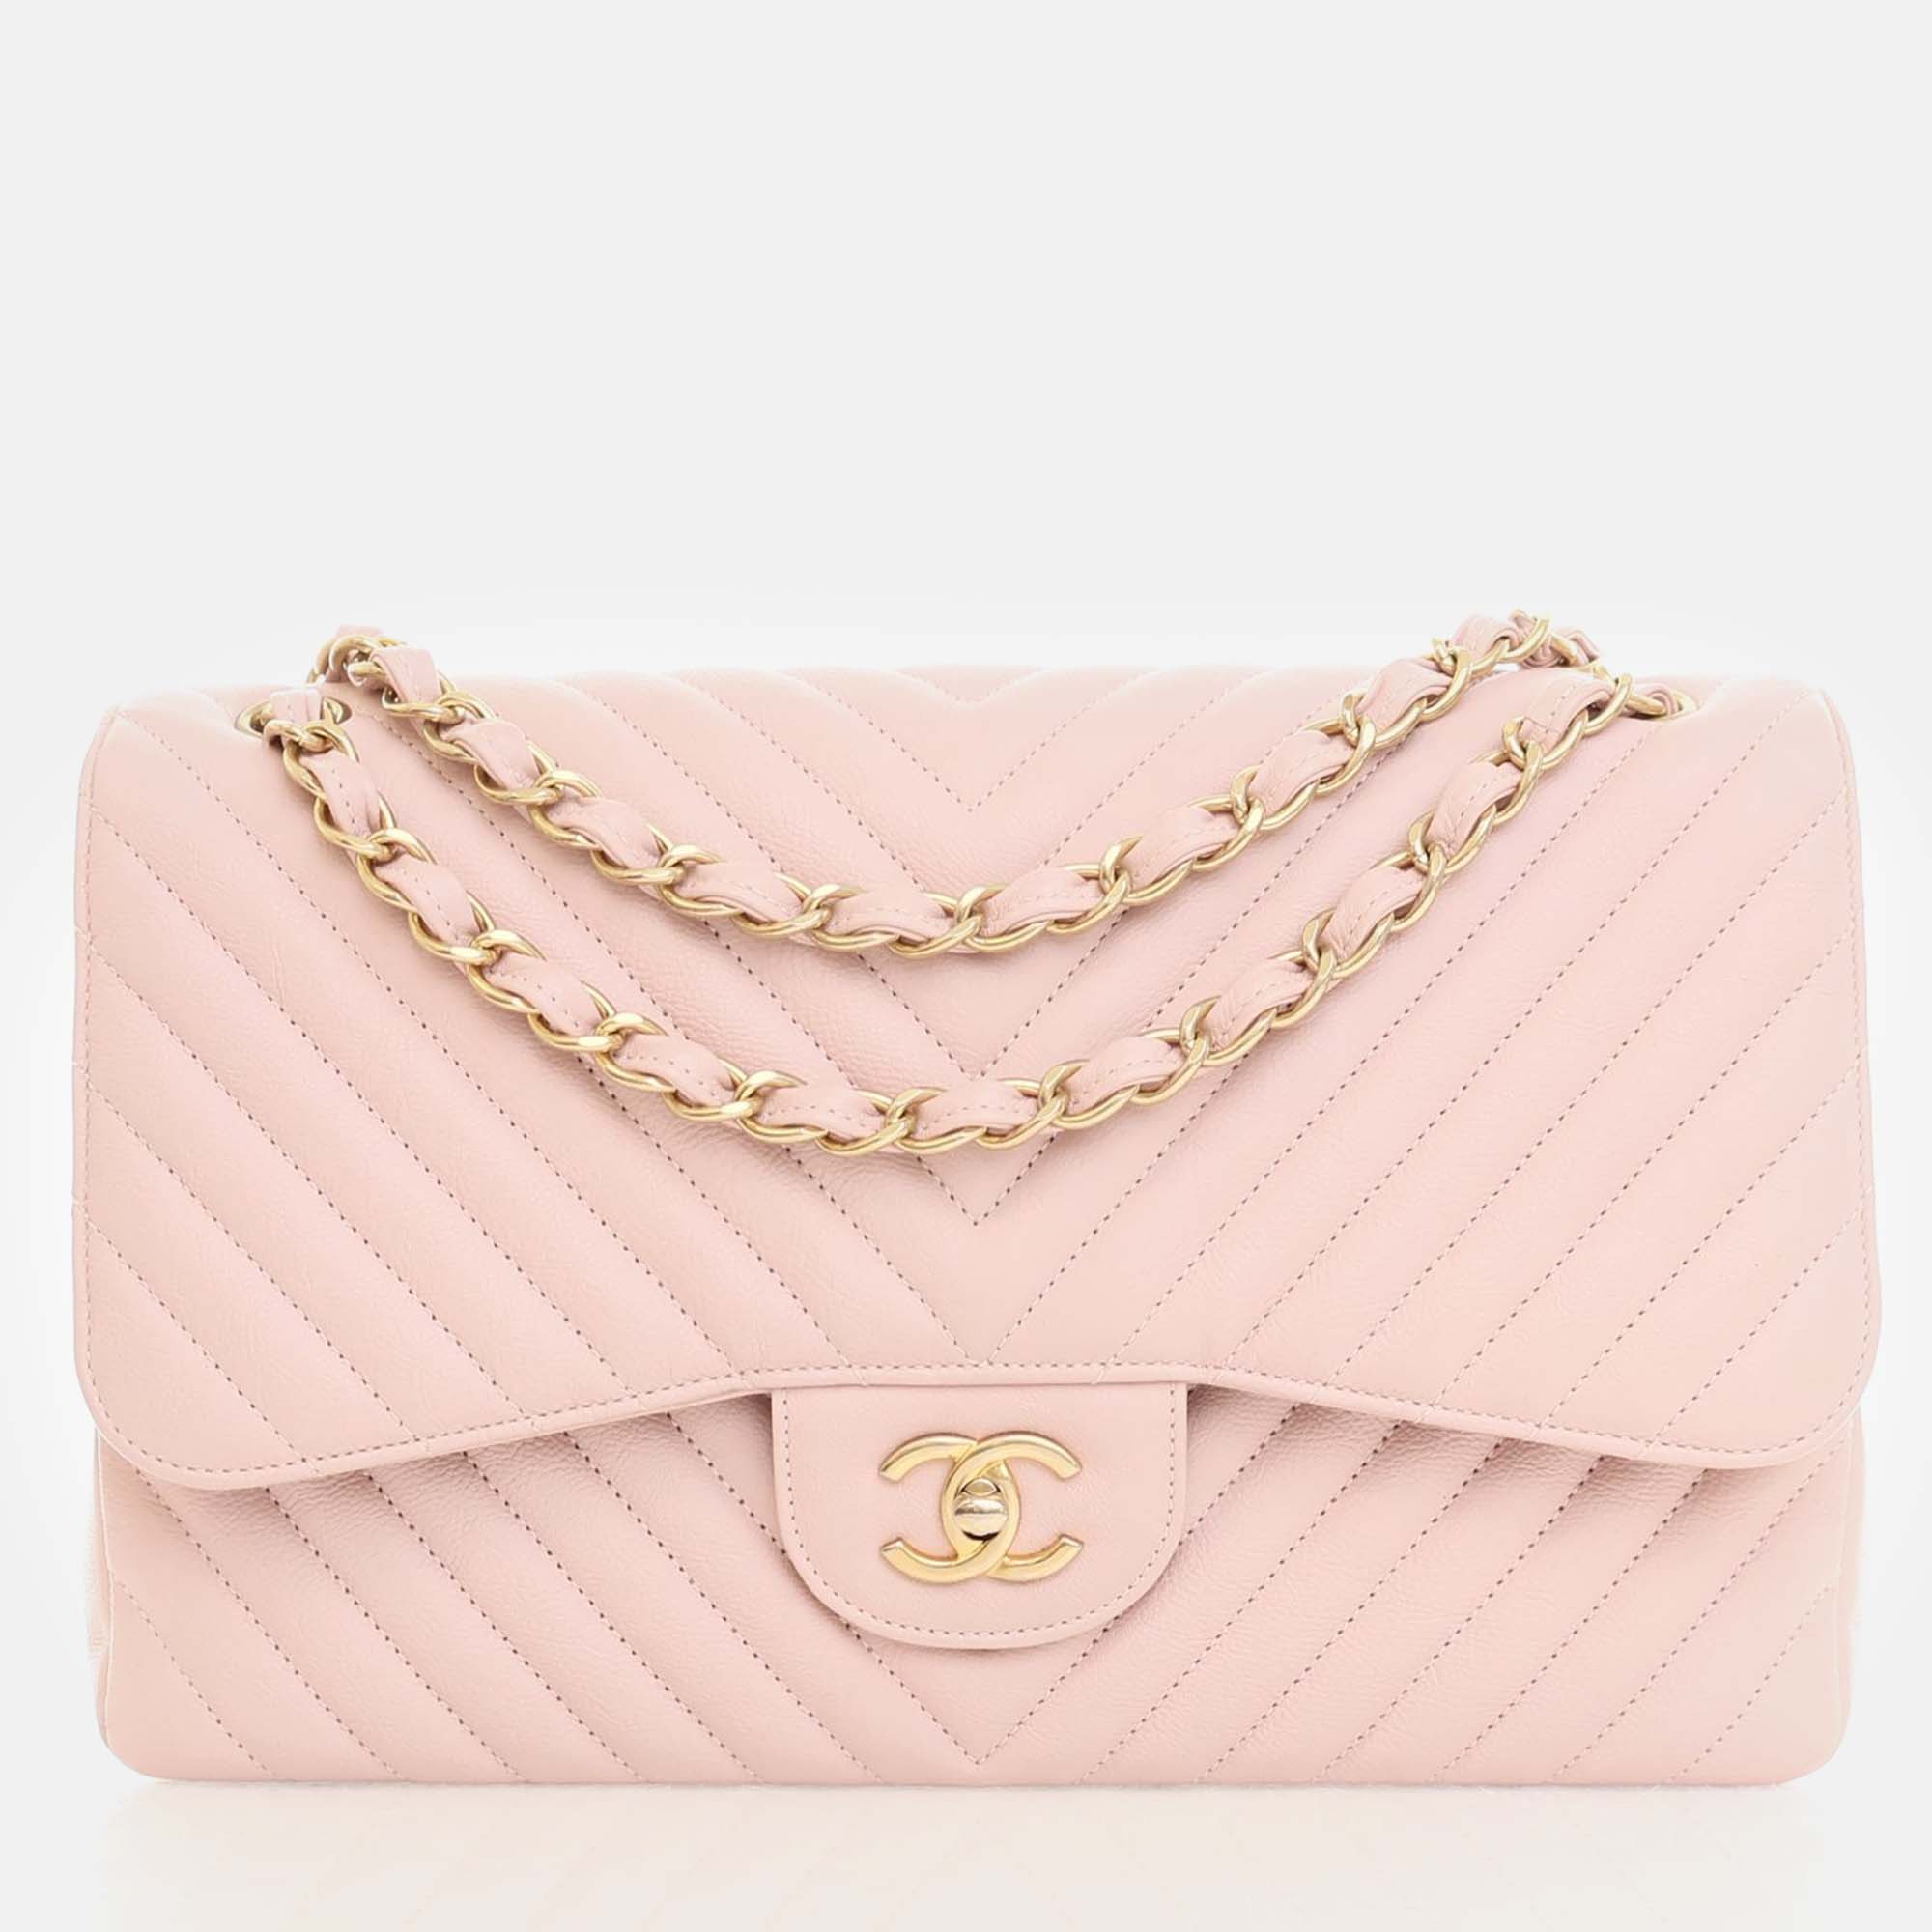 Chanel pink leather chevron medium classic double flap shoulder bags